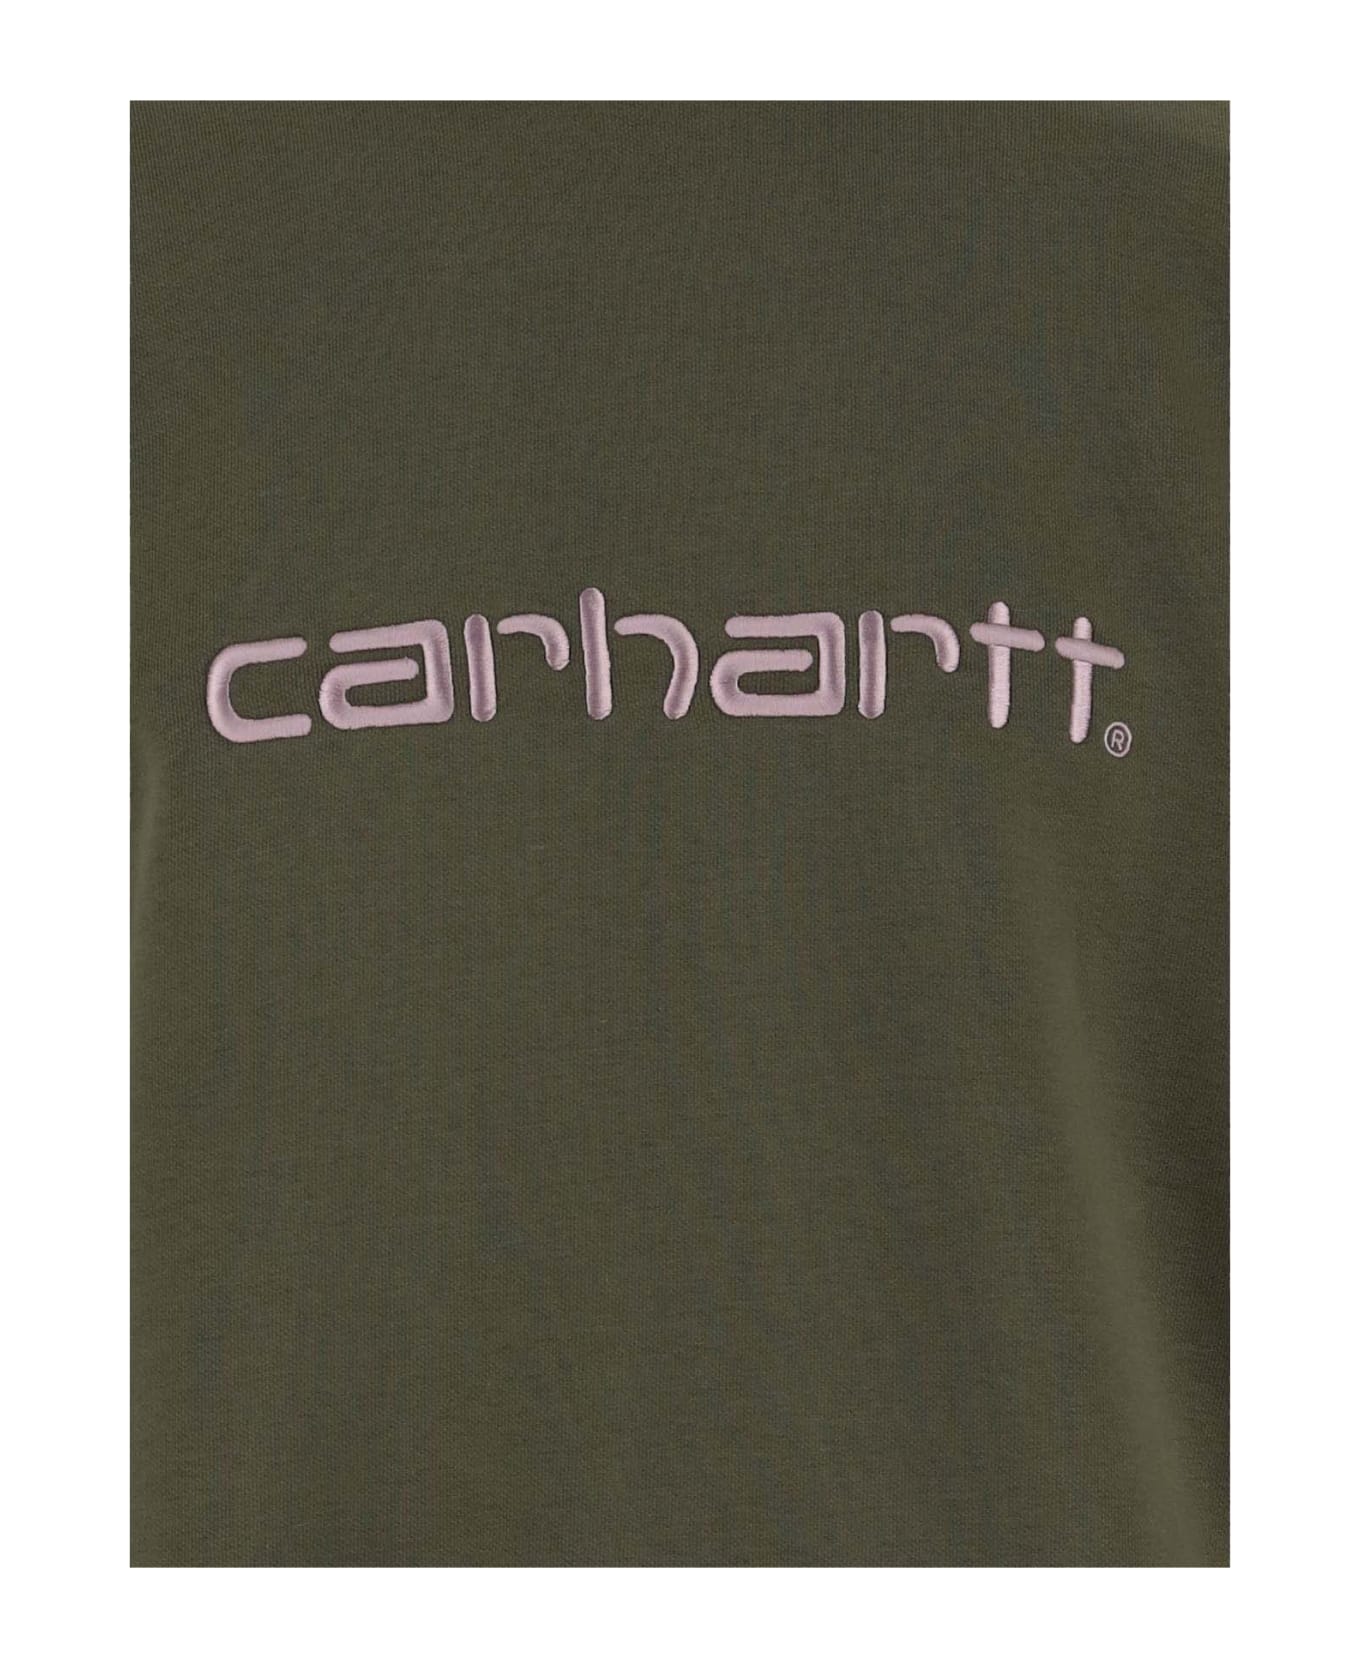 Carhartt Cotton Blend Sweatshirt With Logo - Green